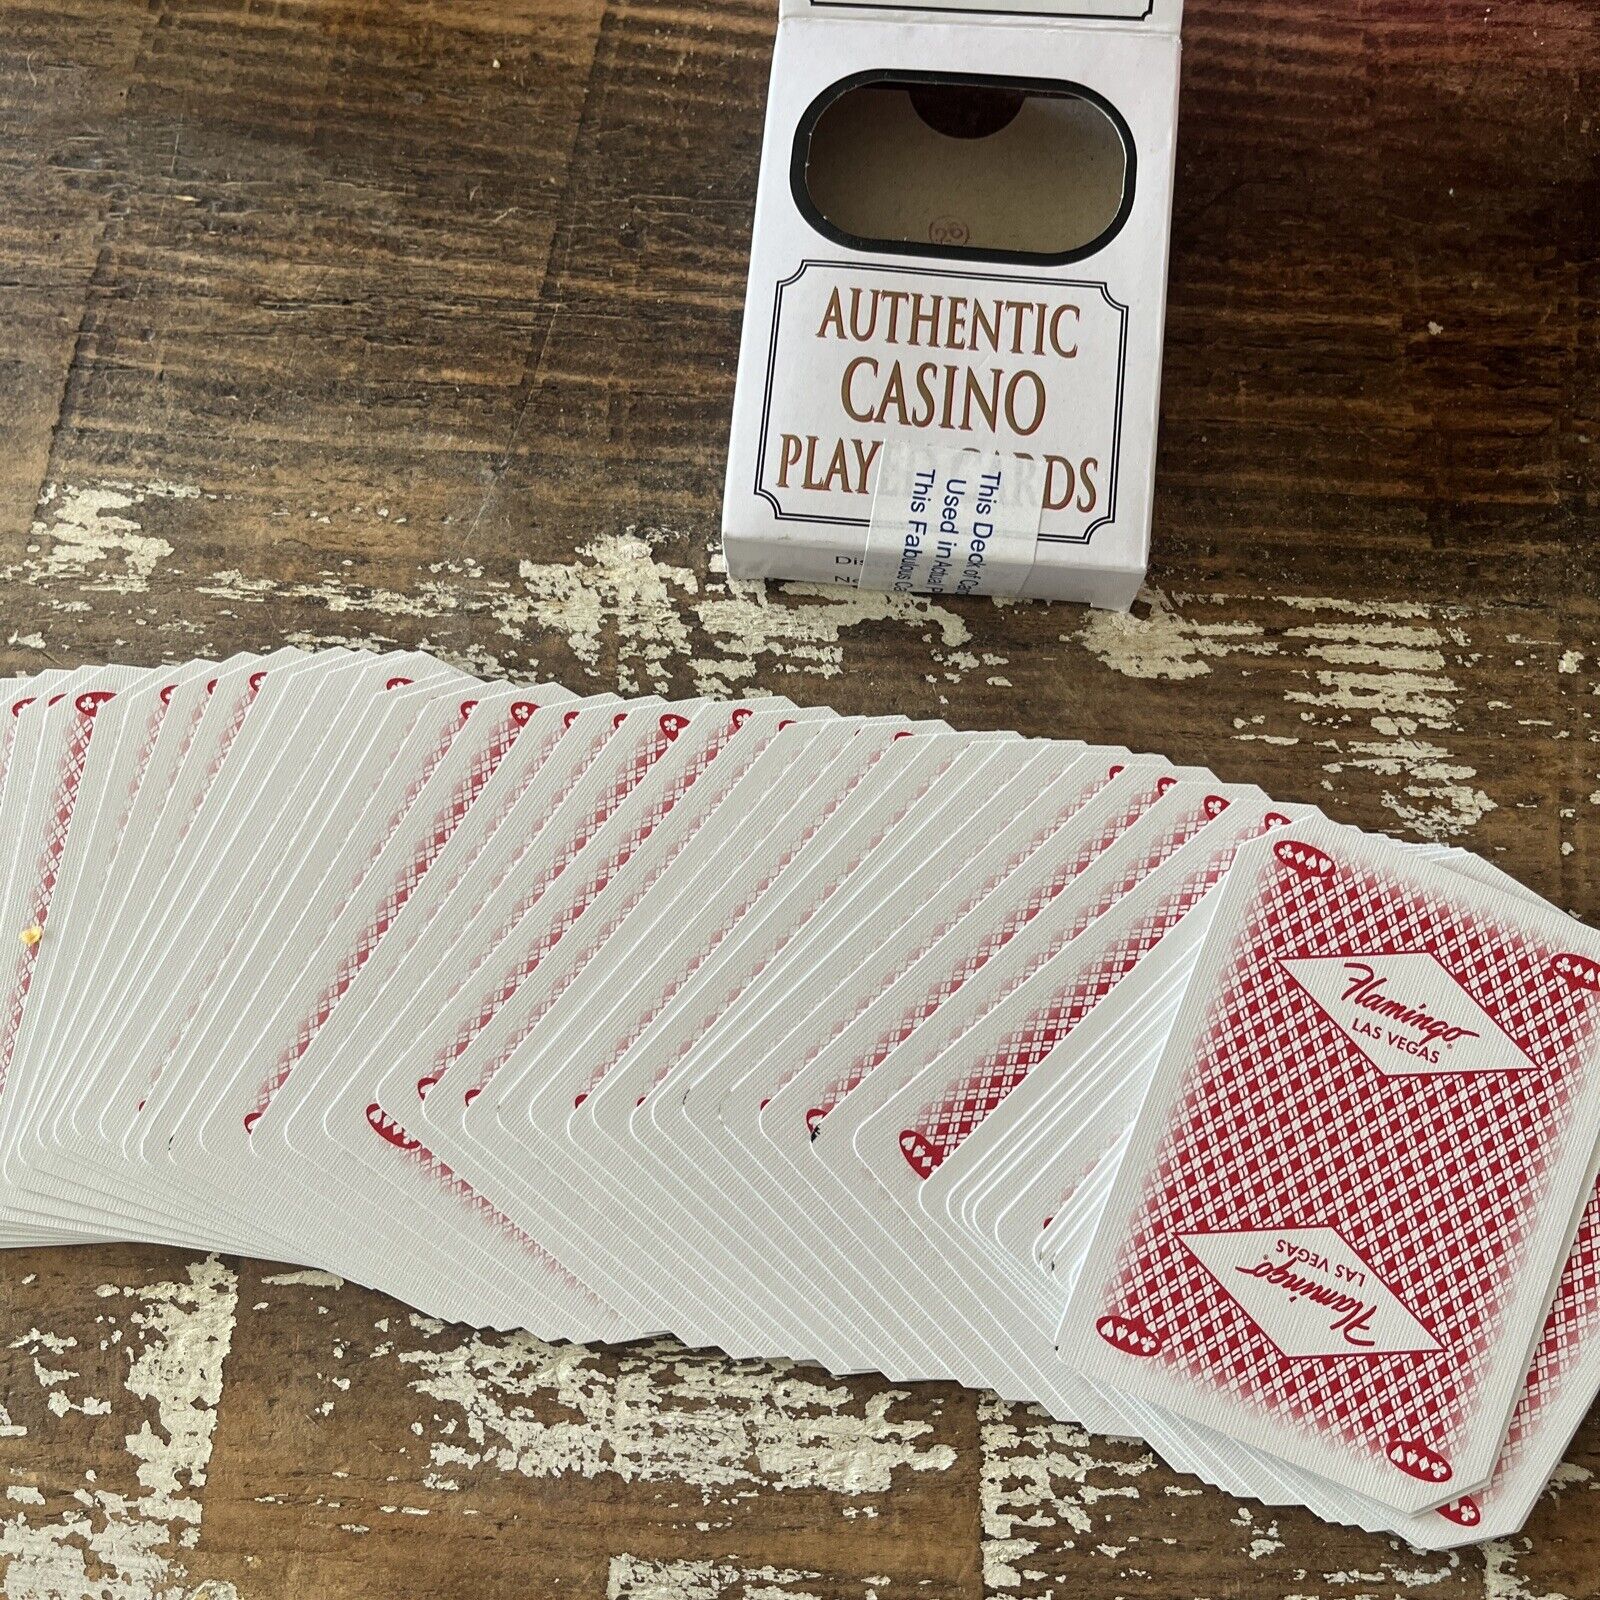 FLAMINGO Vintage Playing Card Deck from Casino Las Vegas